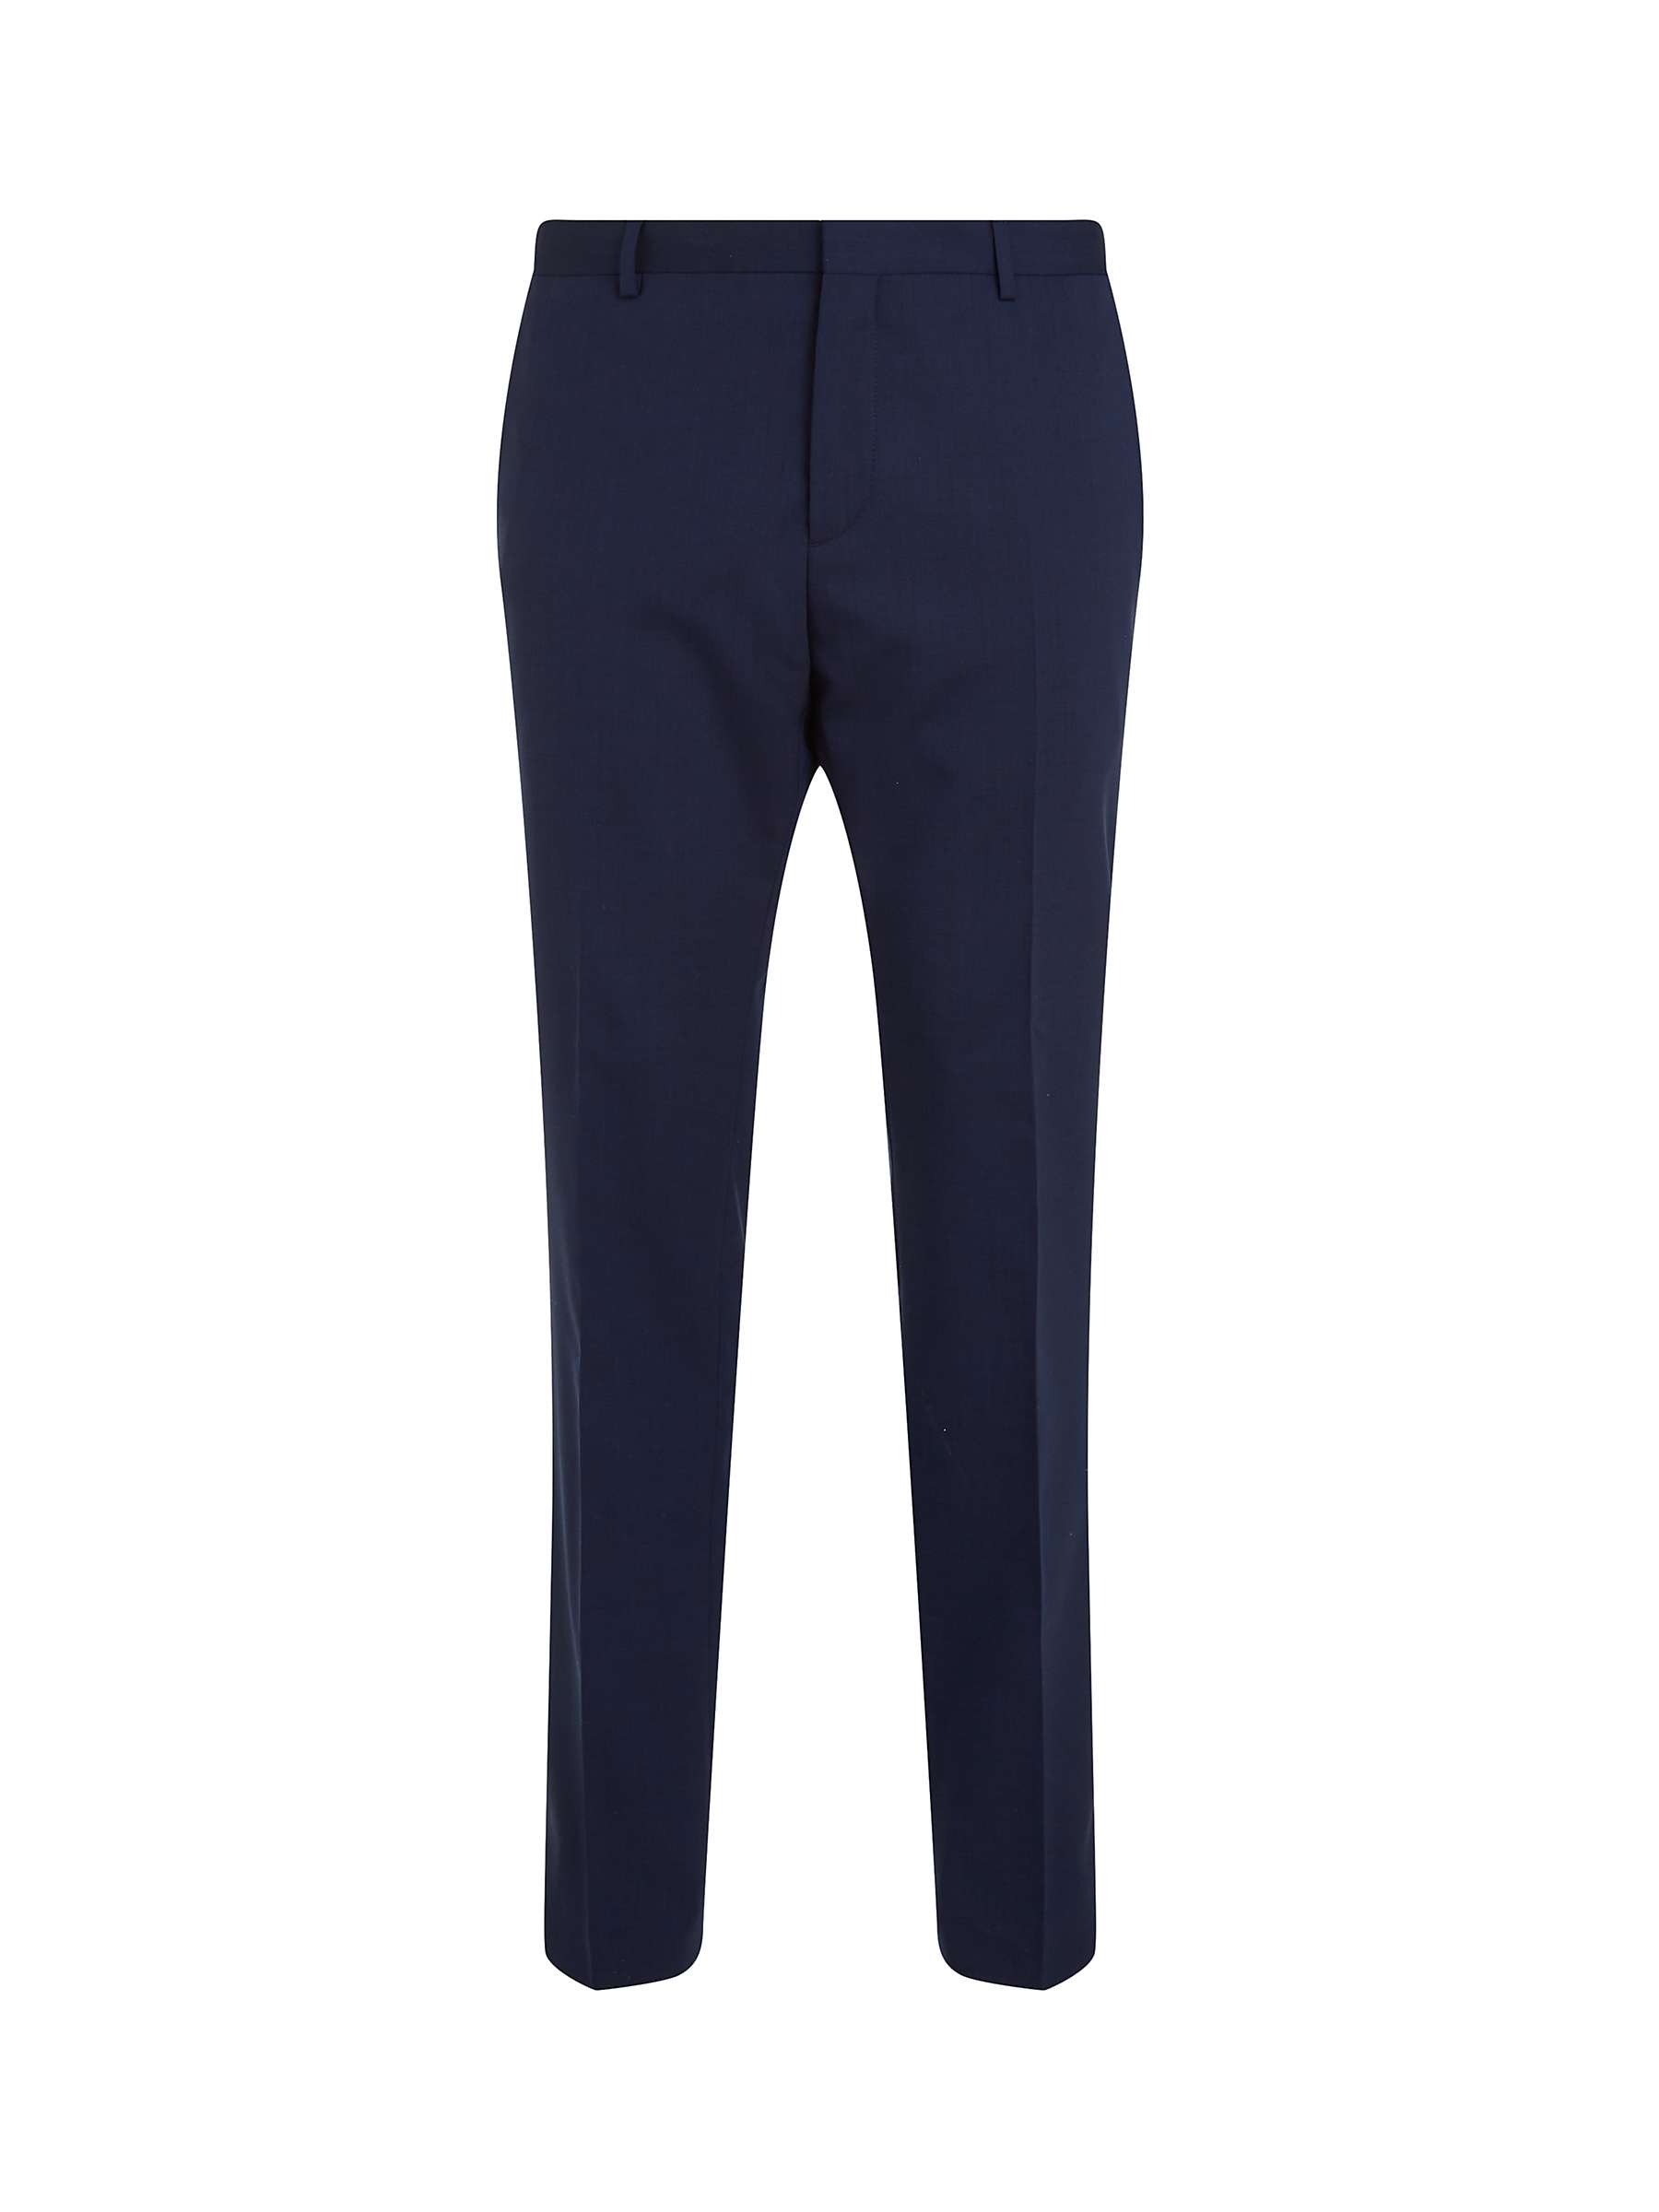 Buy Calvin Klein Slim Fit Stretch Wool Blend Trousers, Ink Blue Online at johnlewis.com